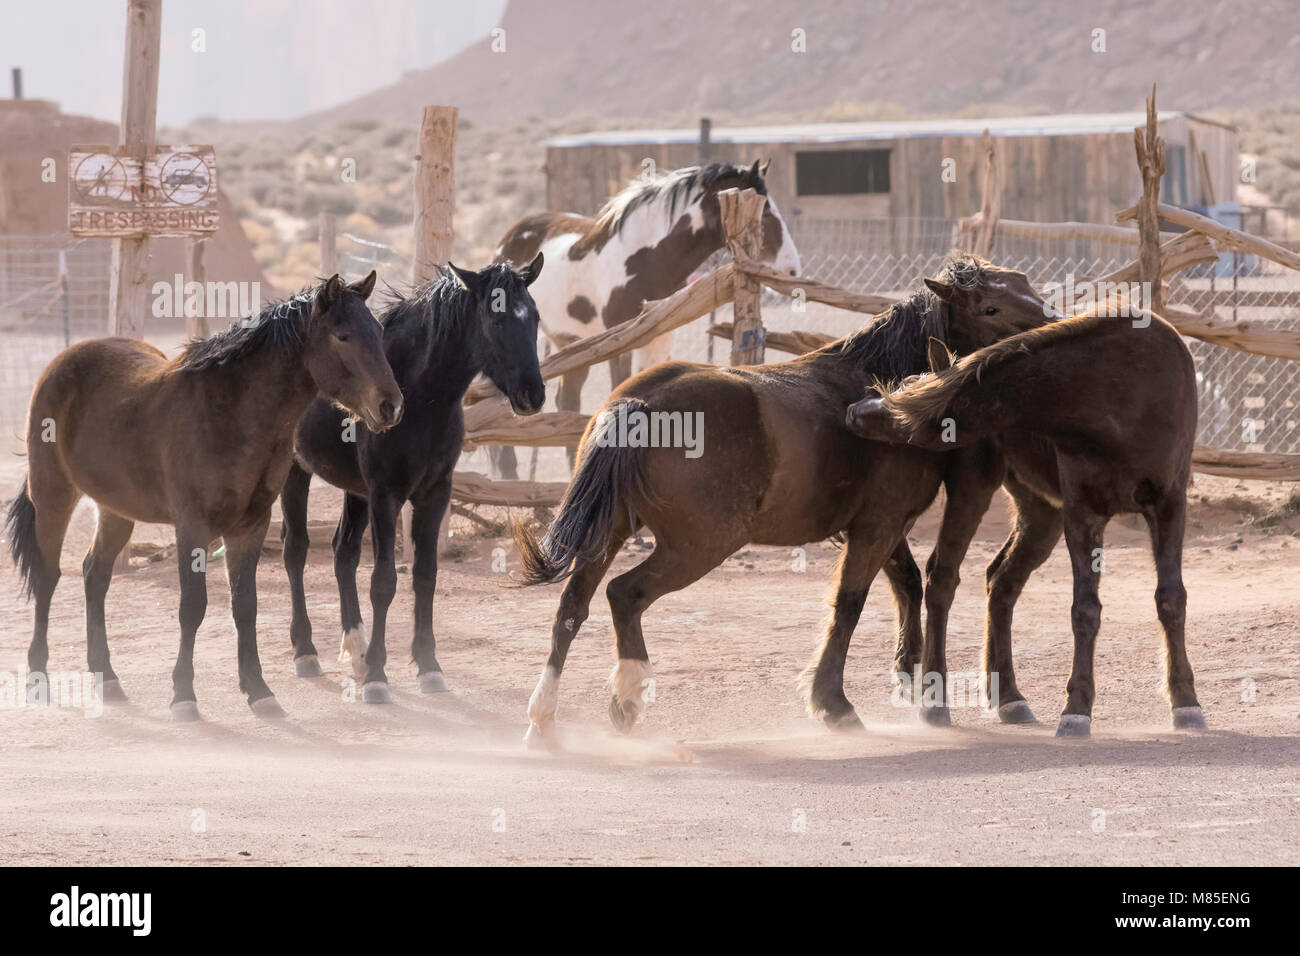 Horses fighting, Monument Valley Tribal Park, Arizona Stock Photo